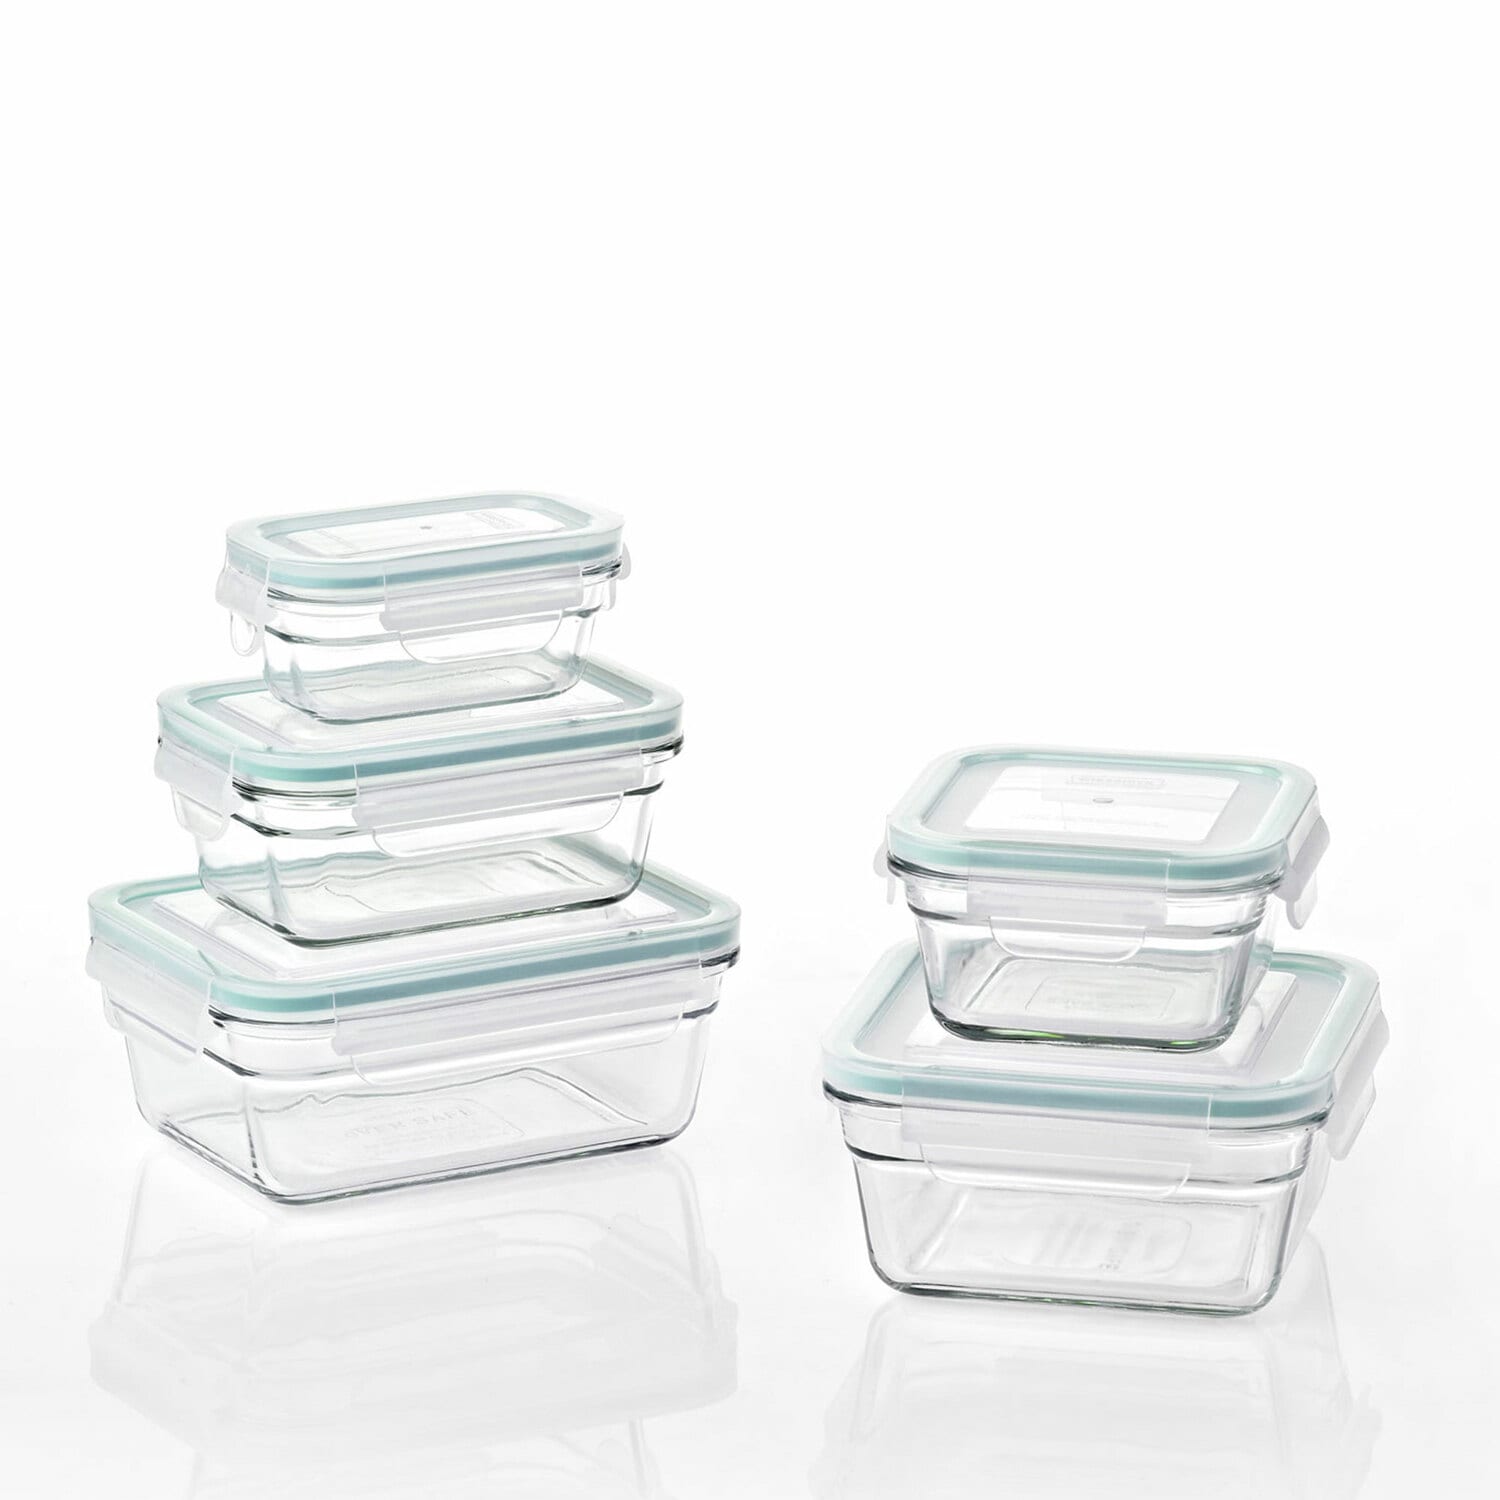 PYREX Star Wars Multisize Glass Bpa-free Reusable Food Storage